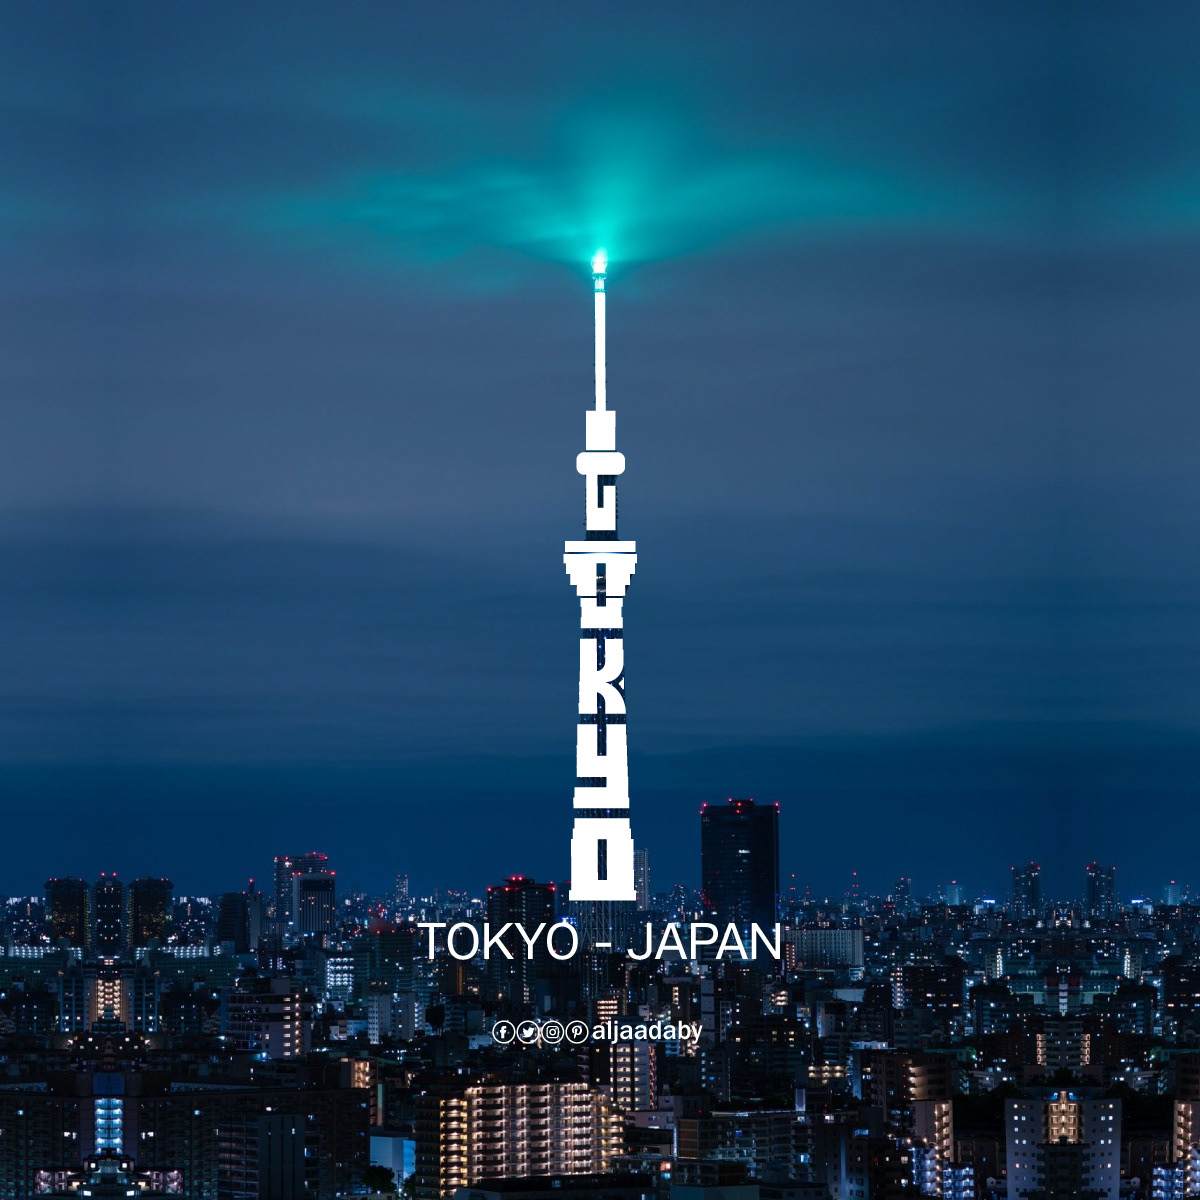 Typographic city logos based on their famous landmarks - Tokyo